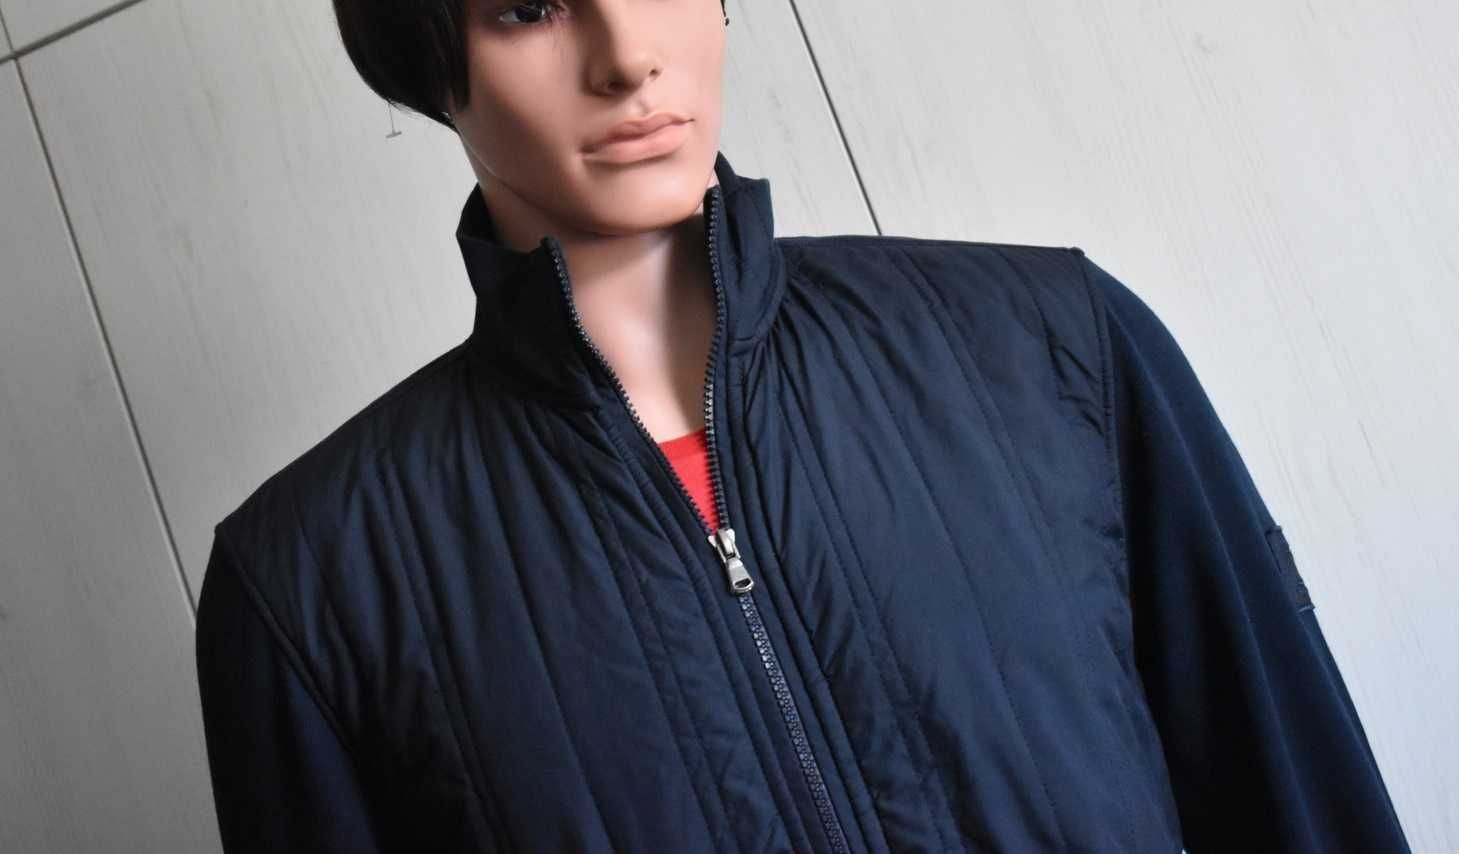 Bluza M zasuwana bawełna pikowana sportowa męska kurtka bomberka